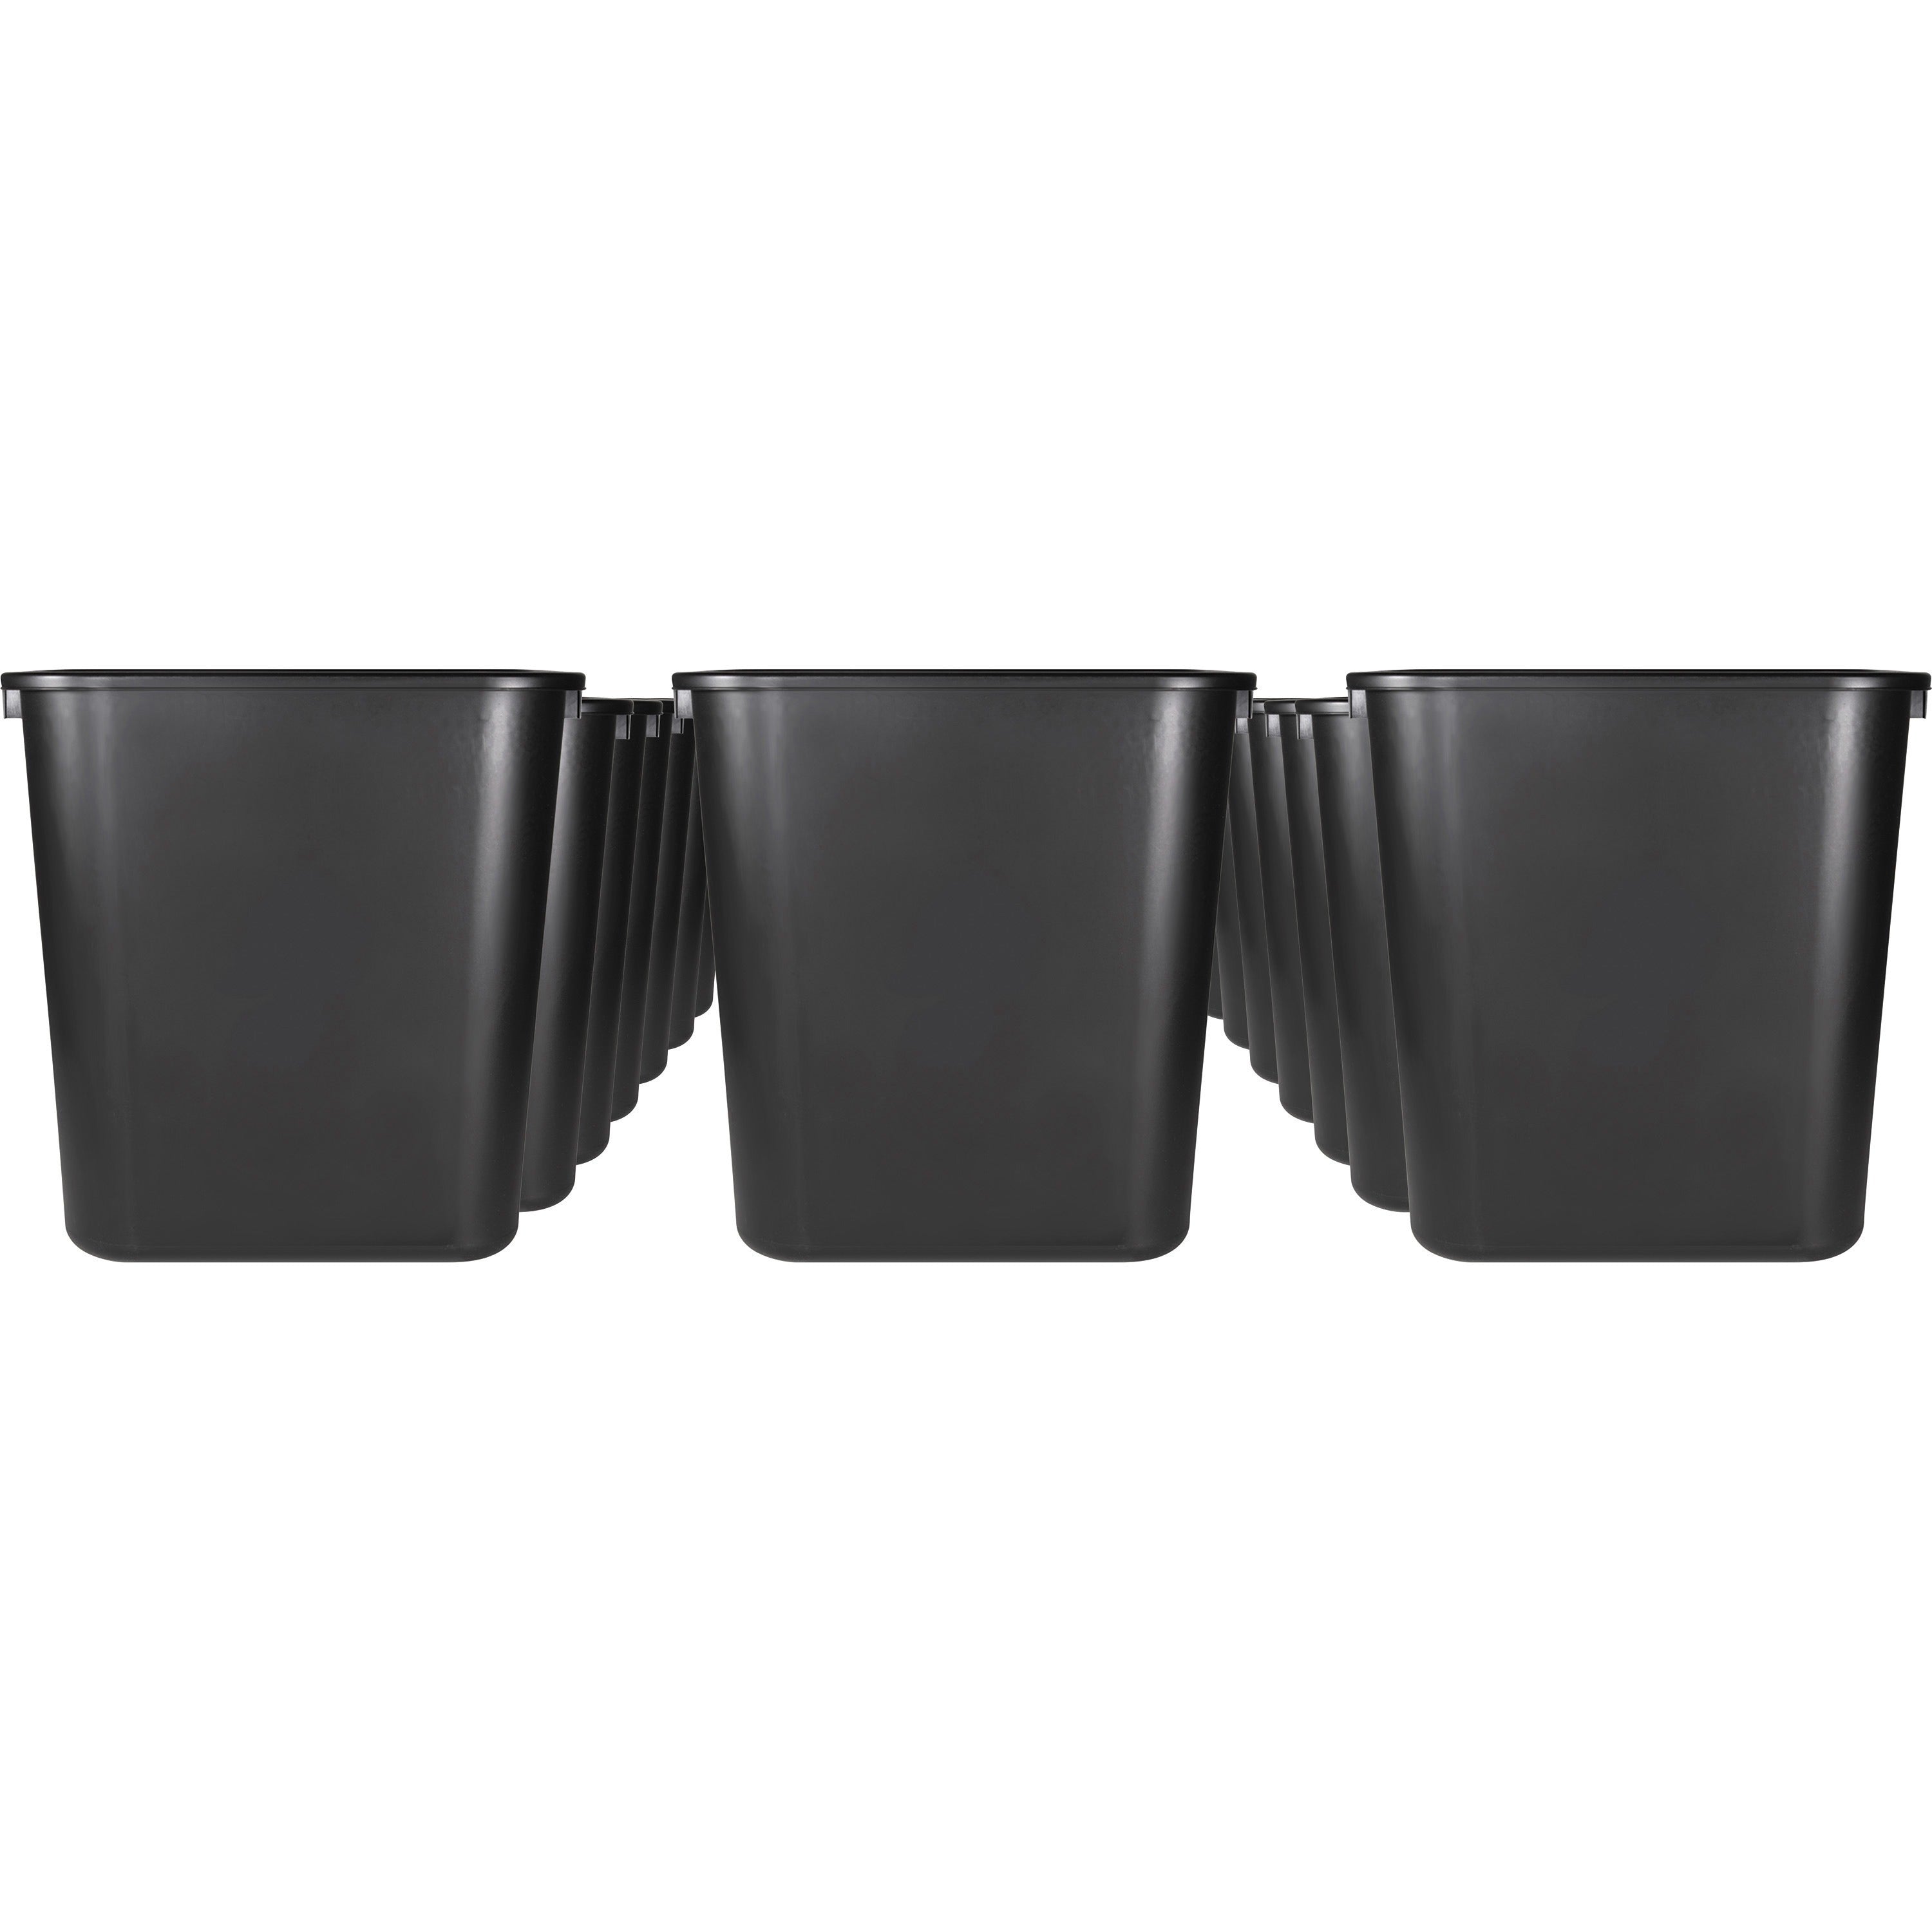 sparco-rectangular-wastebasket-7-gal-capacity-rectangular-15-height-x-145-width-x-105-depth-polyethylene-black-24-carton_spr02160ct - 1